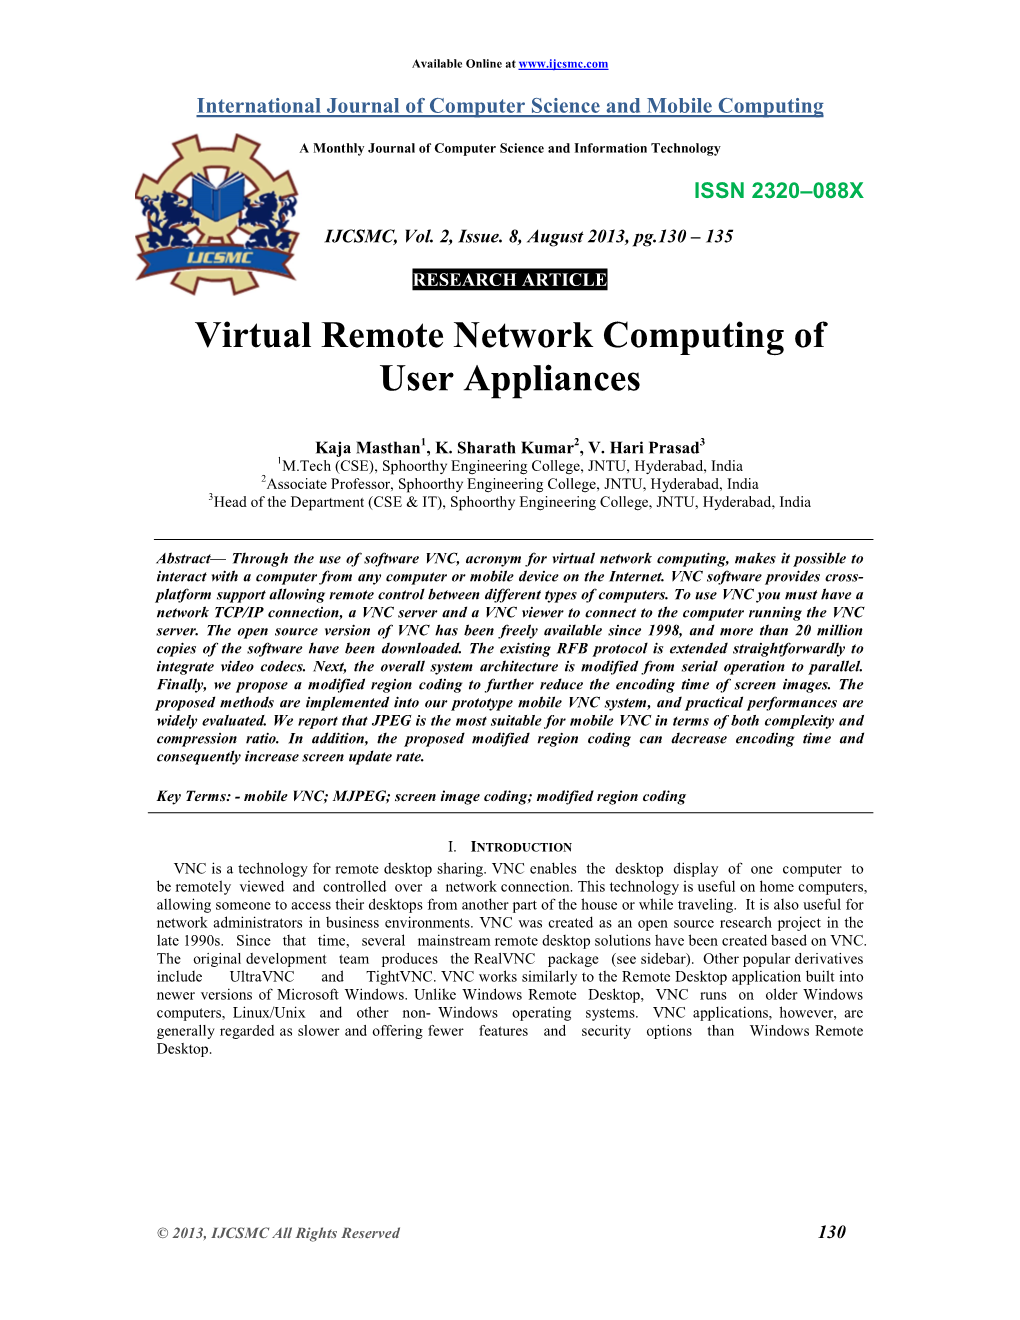 Virtual Remote Network Computing of User Appliances